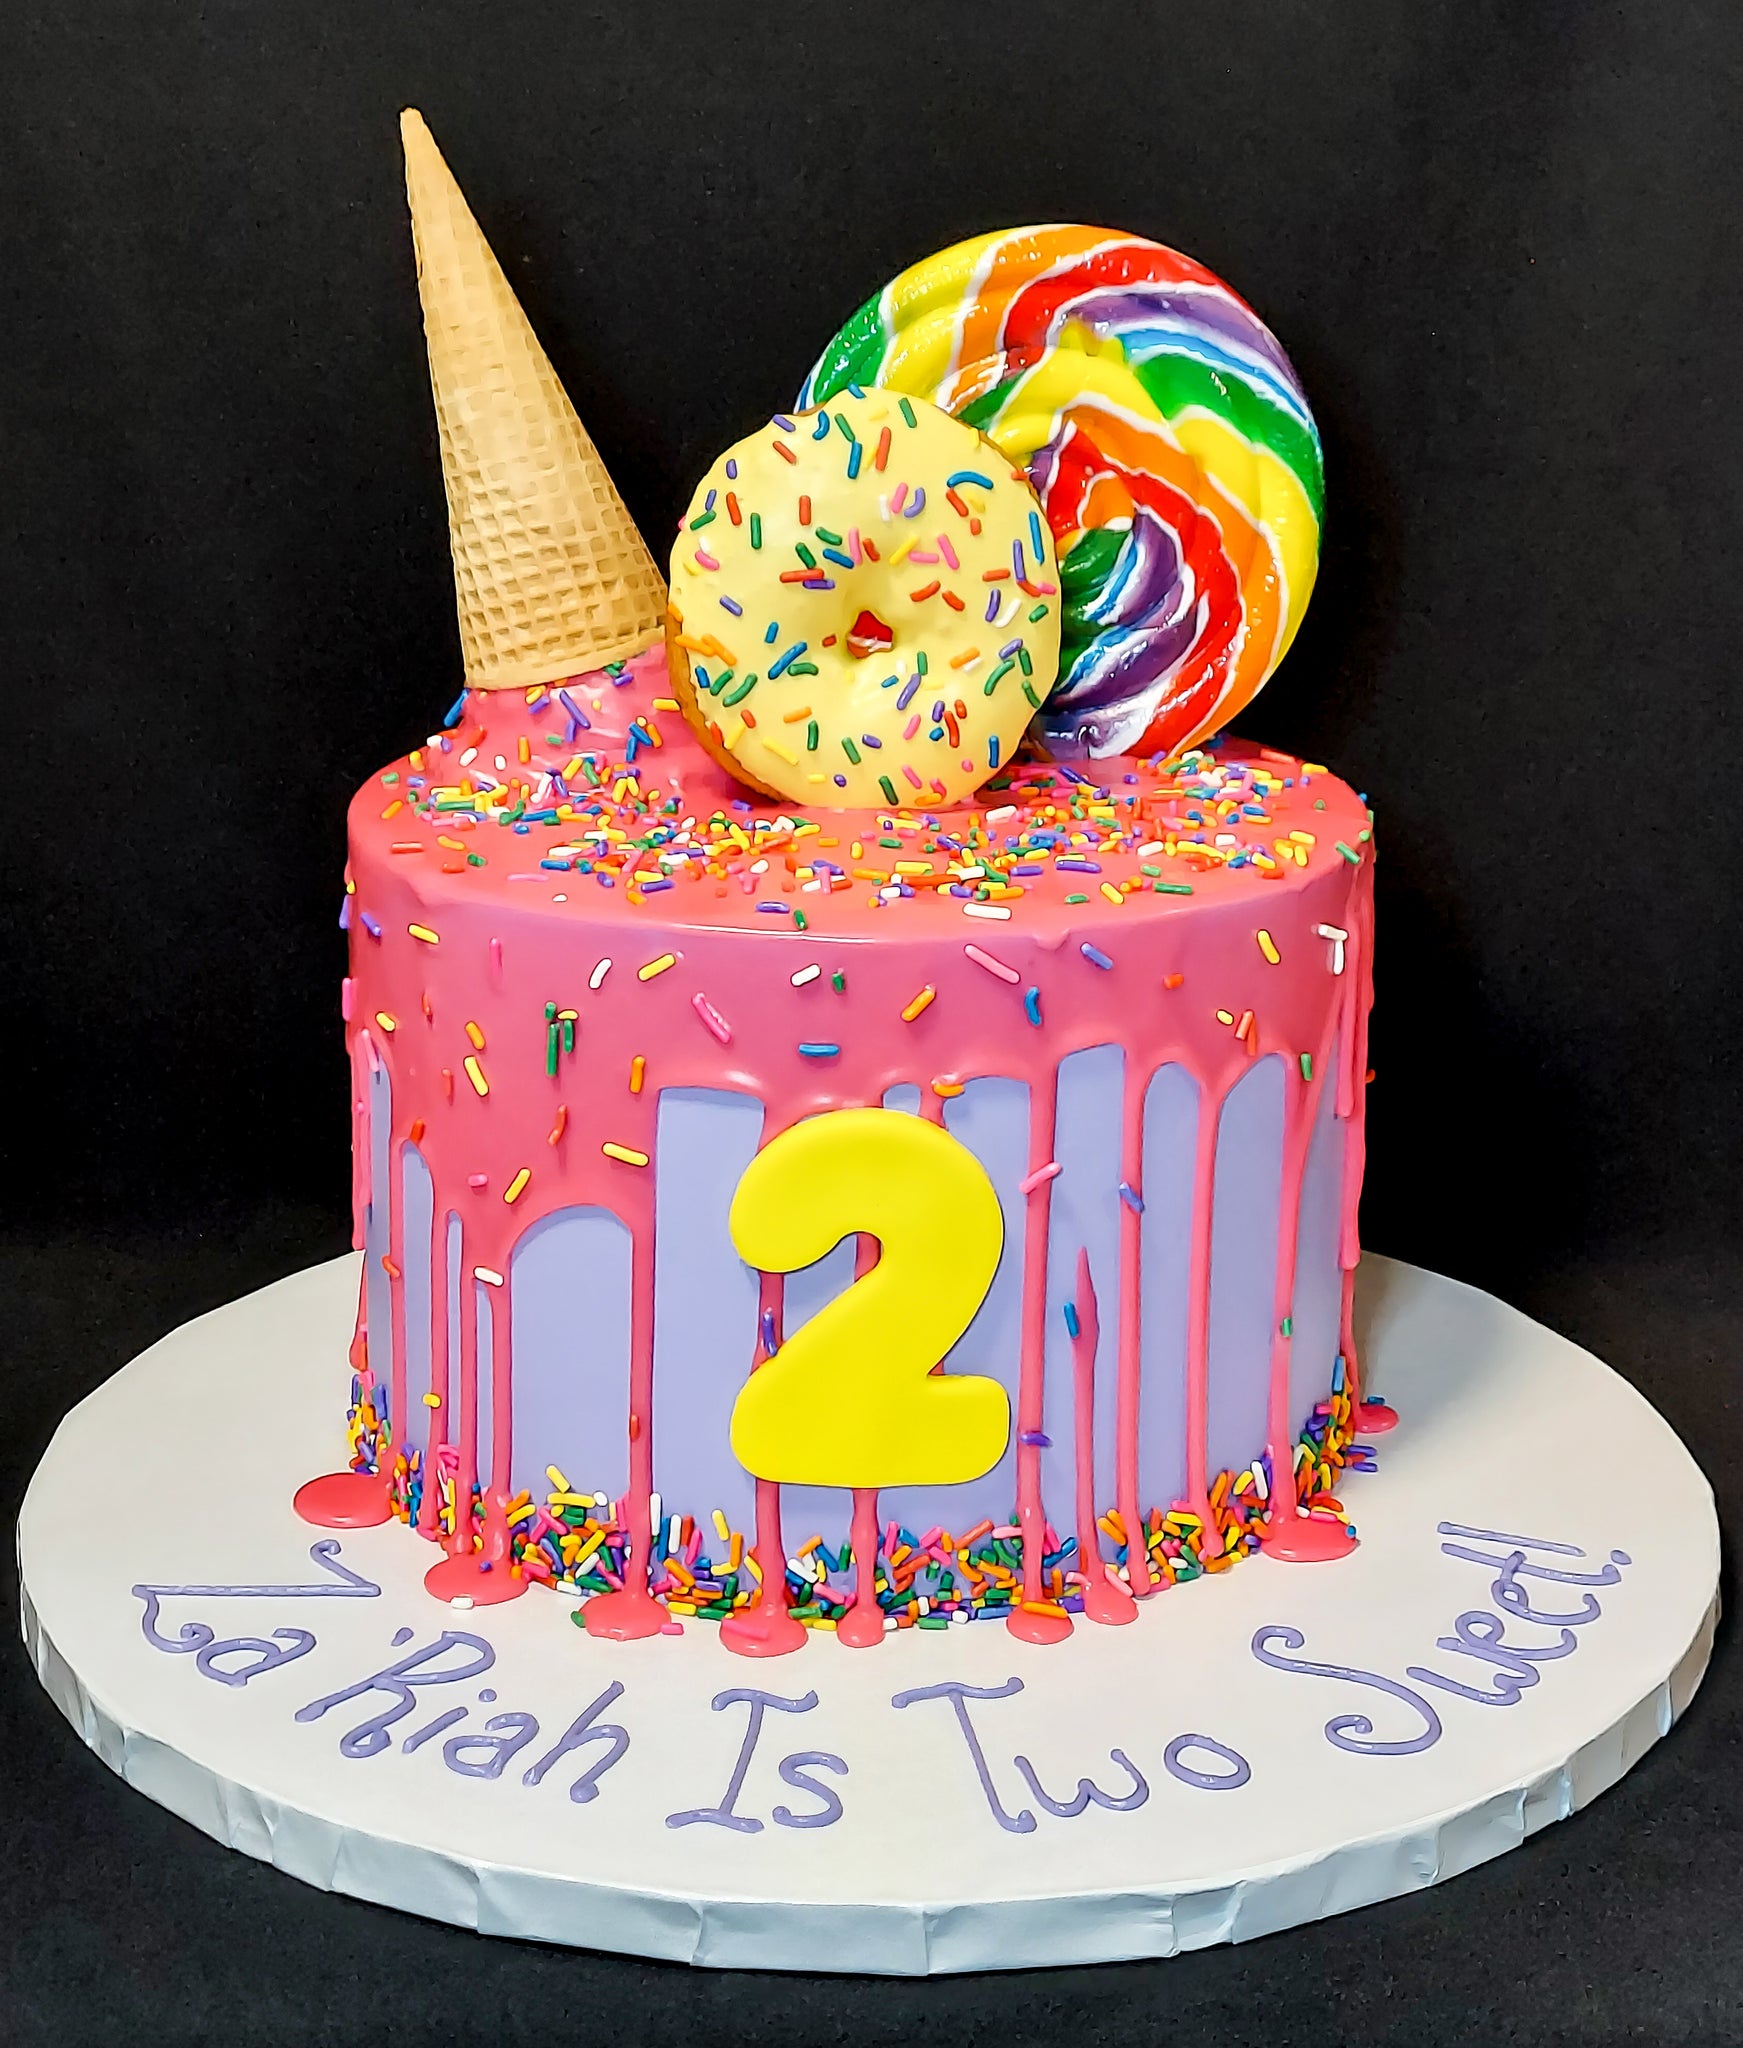 Bespoke Cakes & Bakes - Cake Maker, Birthday Cakes, Wedding Cakes